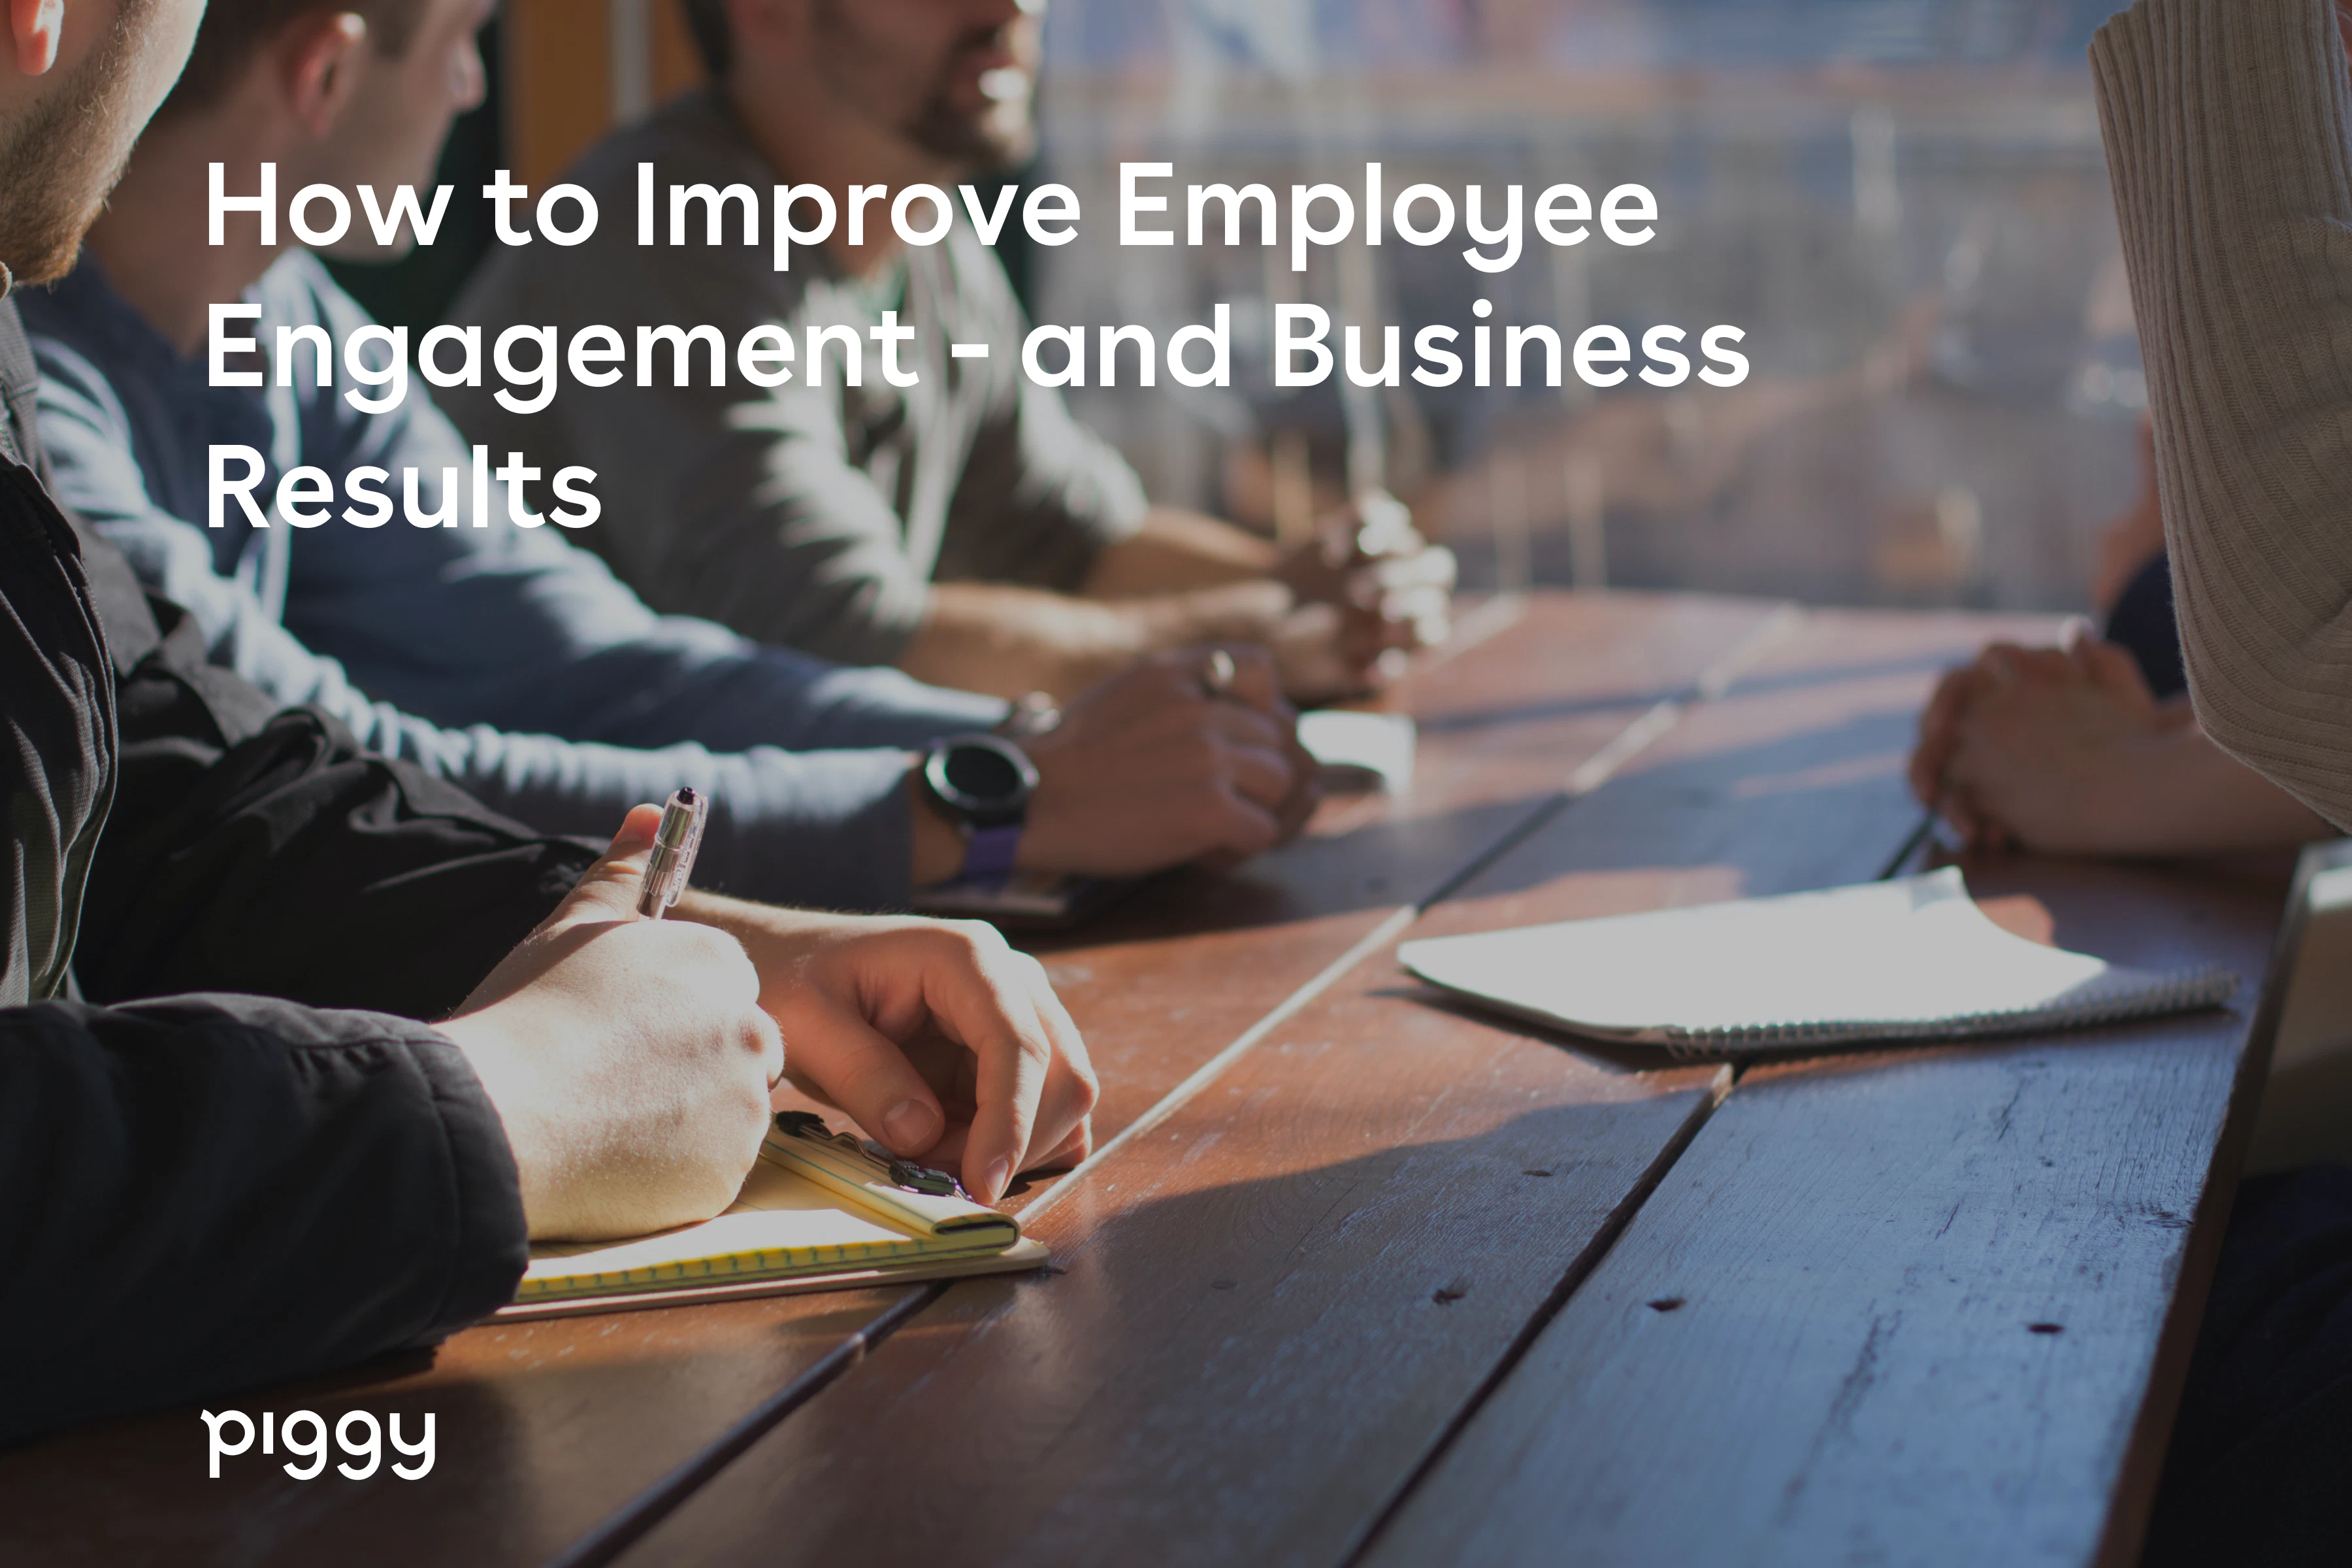 improve-employee-engagement